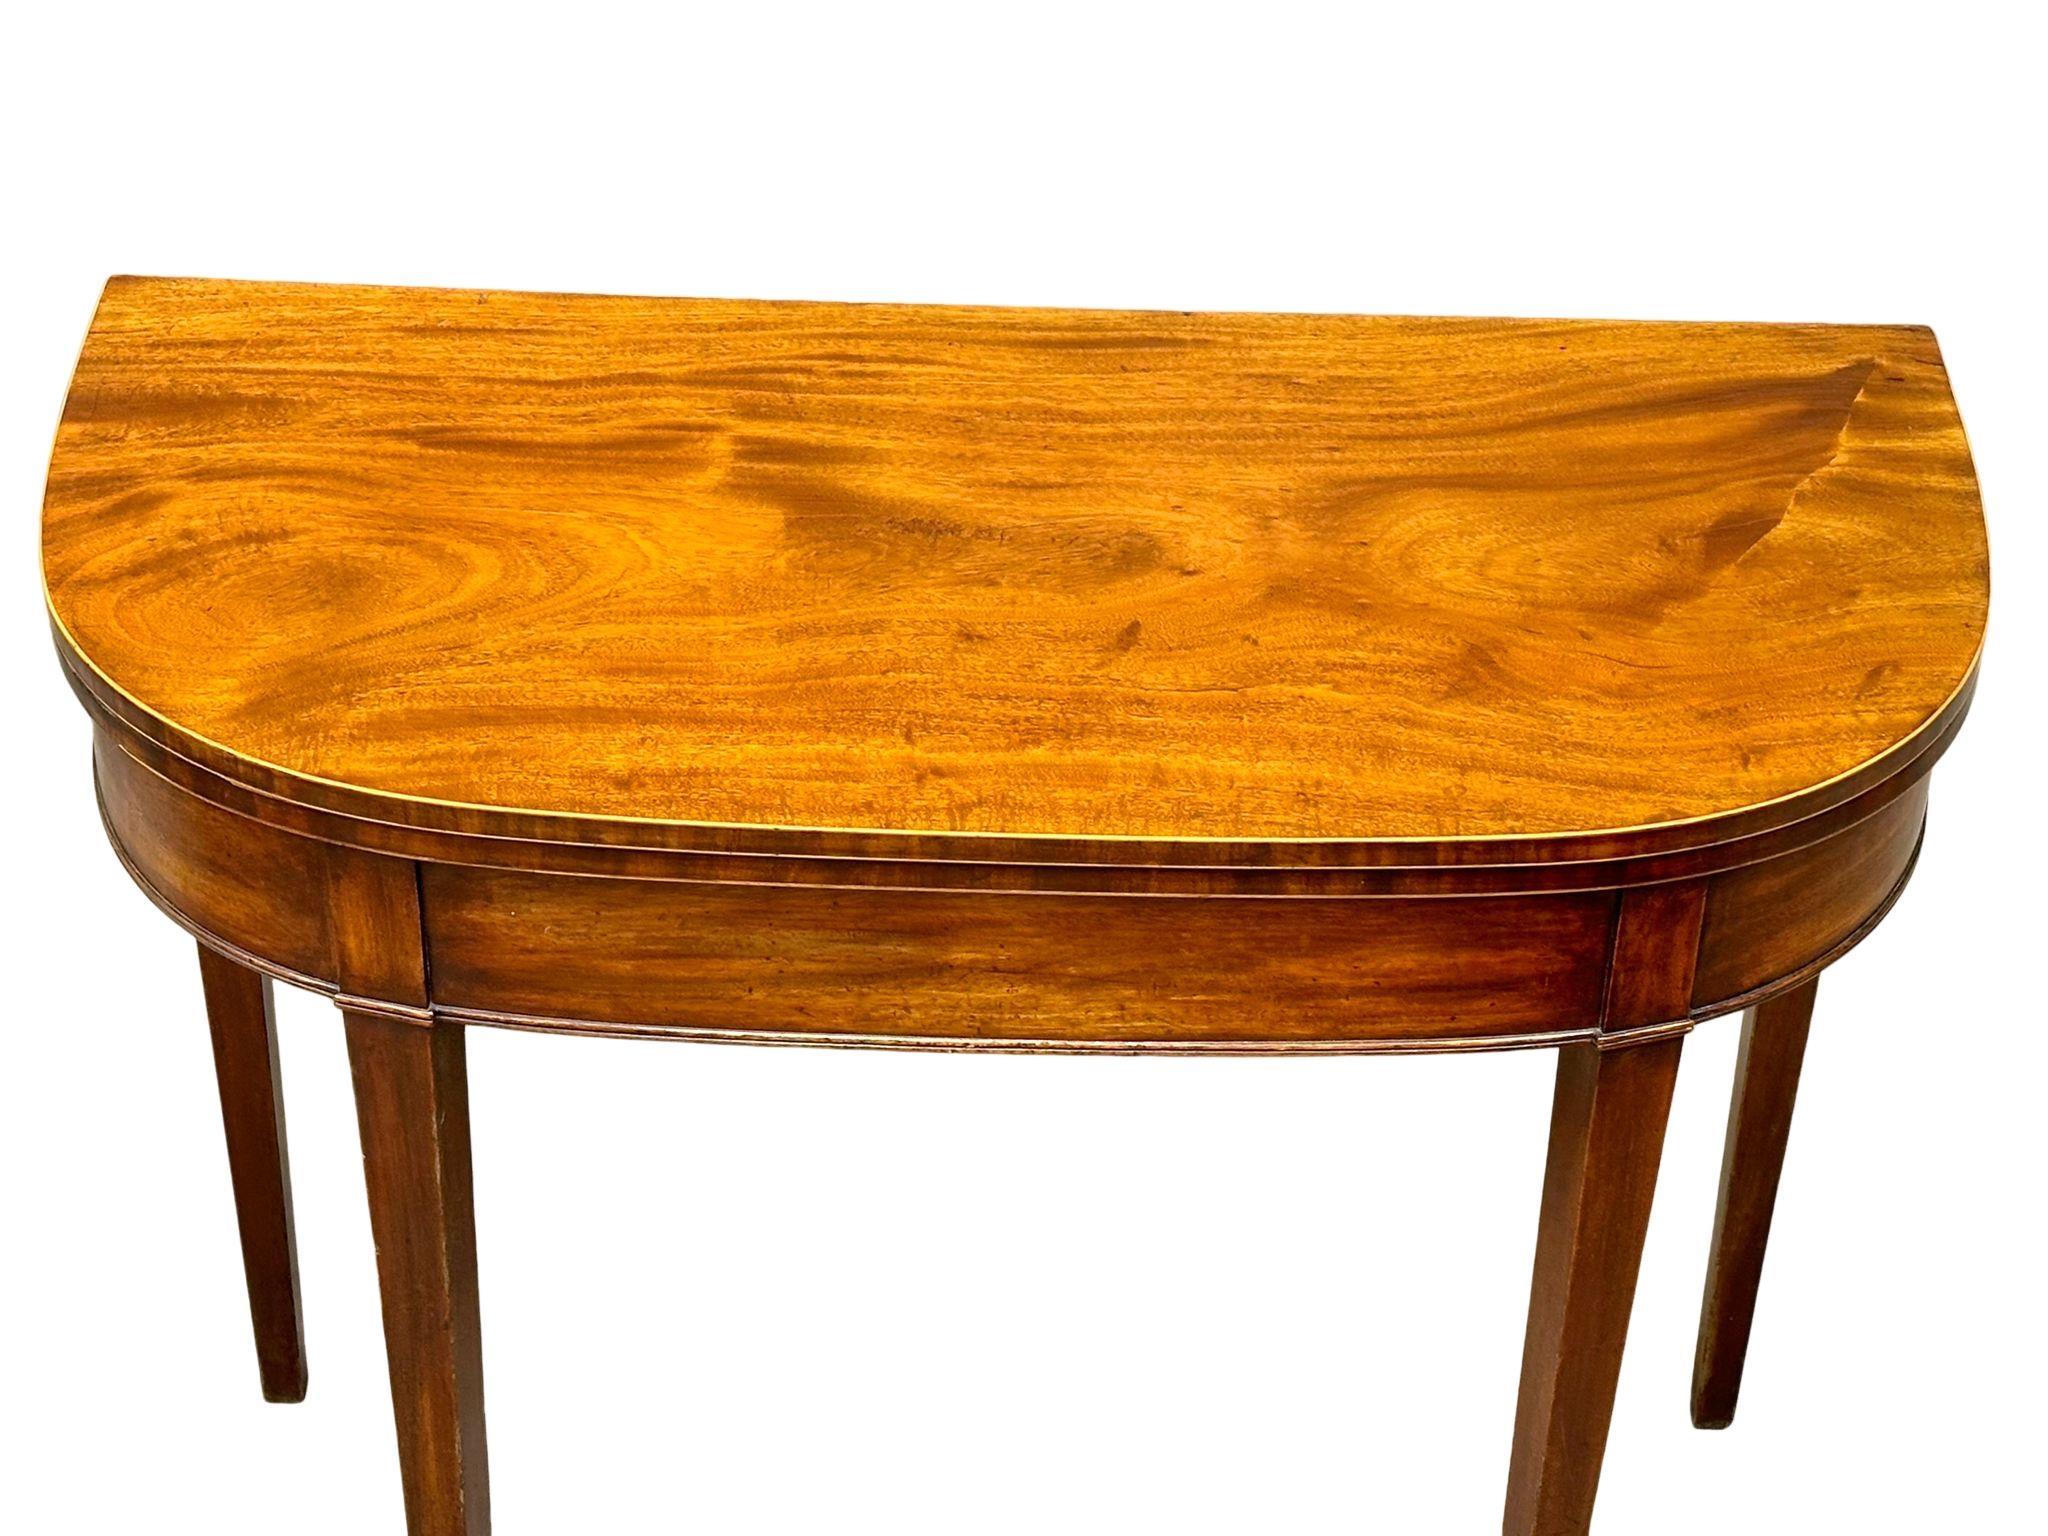 A George III inlaid mahogany turnover tea table. Circa 1800. 91x45.5x73cm - Image 6 of 6